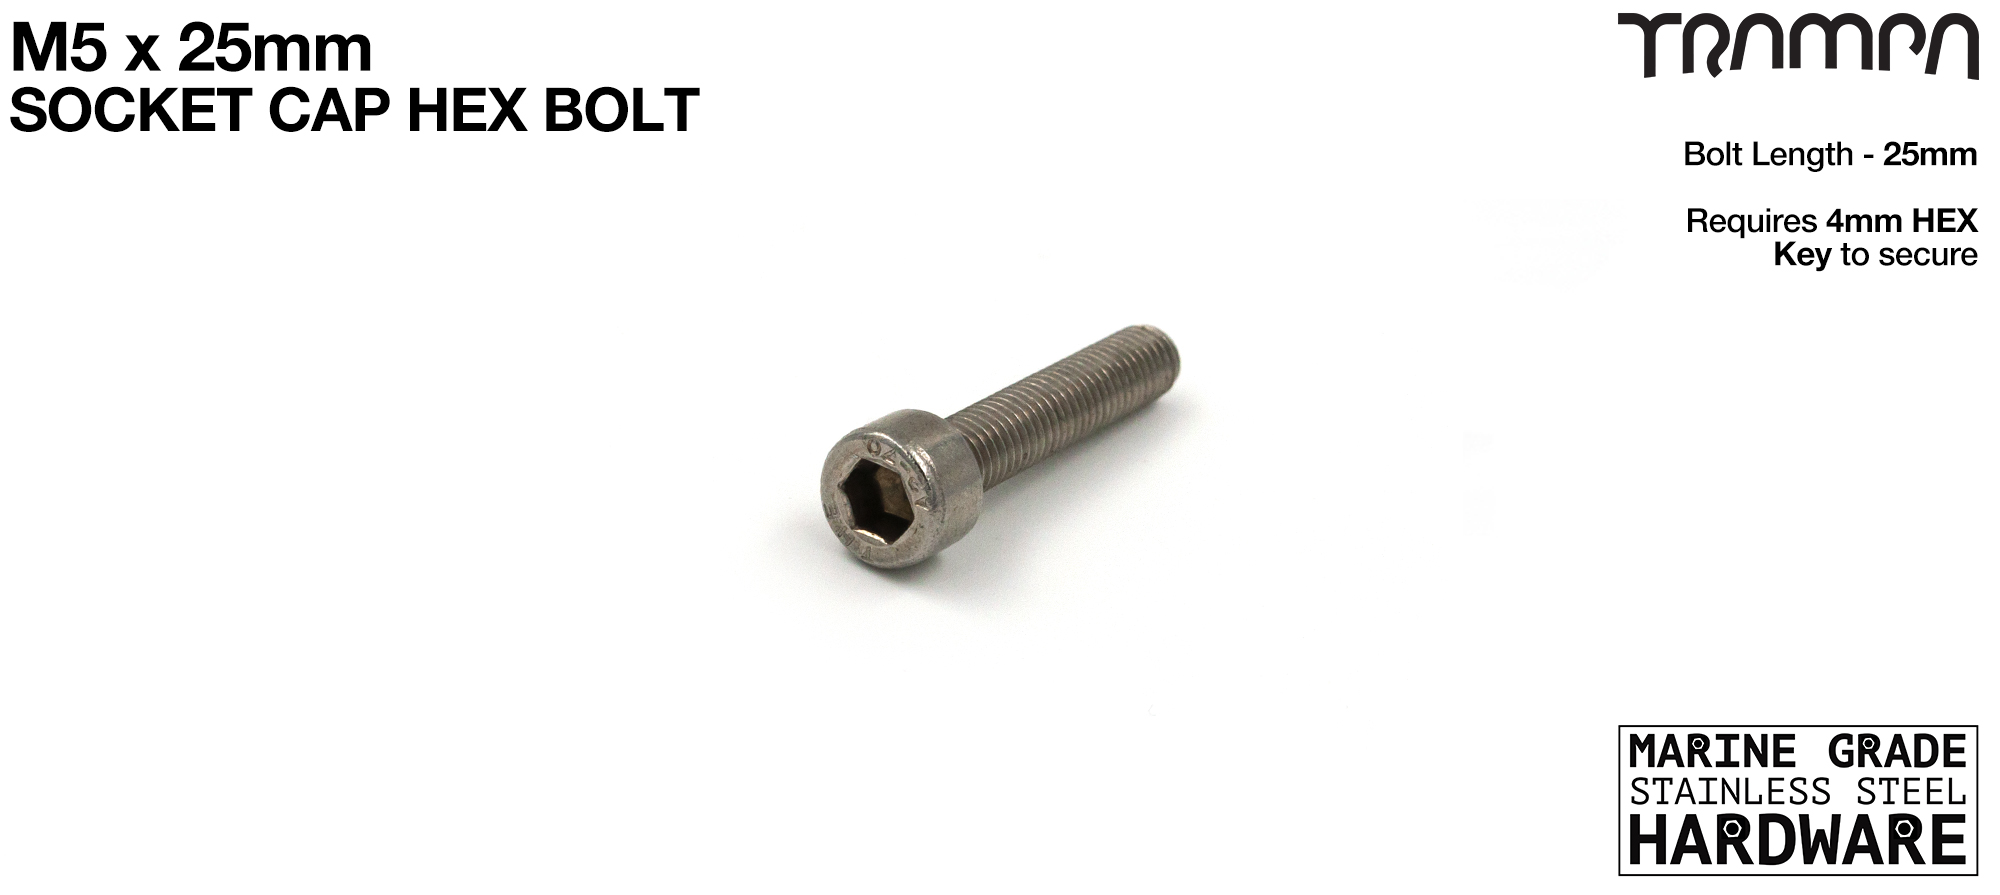 M5 x 25mm Socket Capped Head Allen-Key Bolt ISO 4762 Marine Grade Stainless Steel